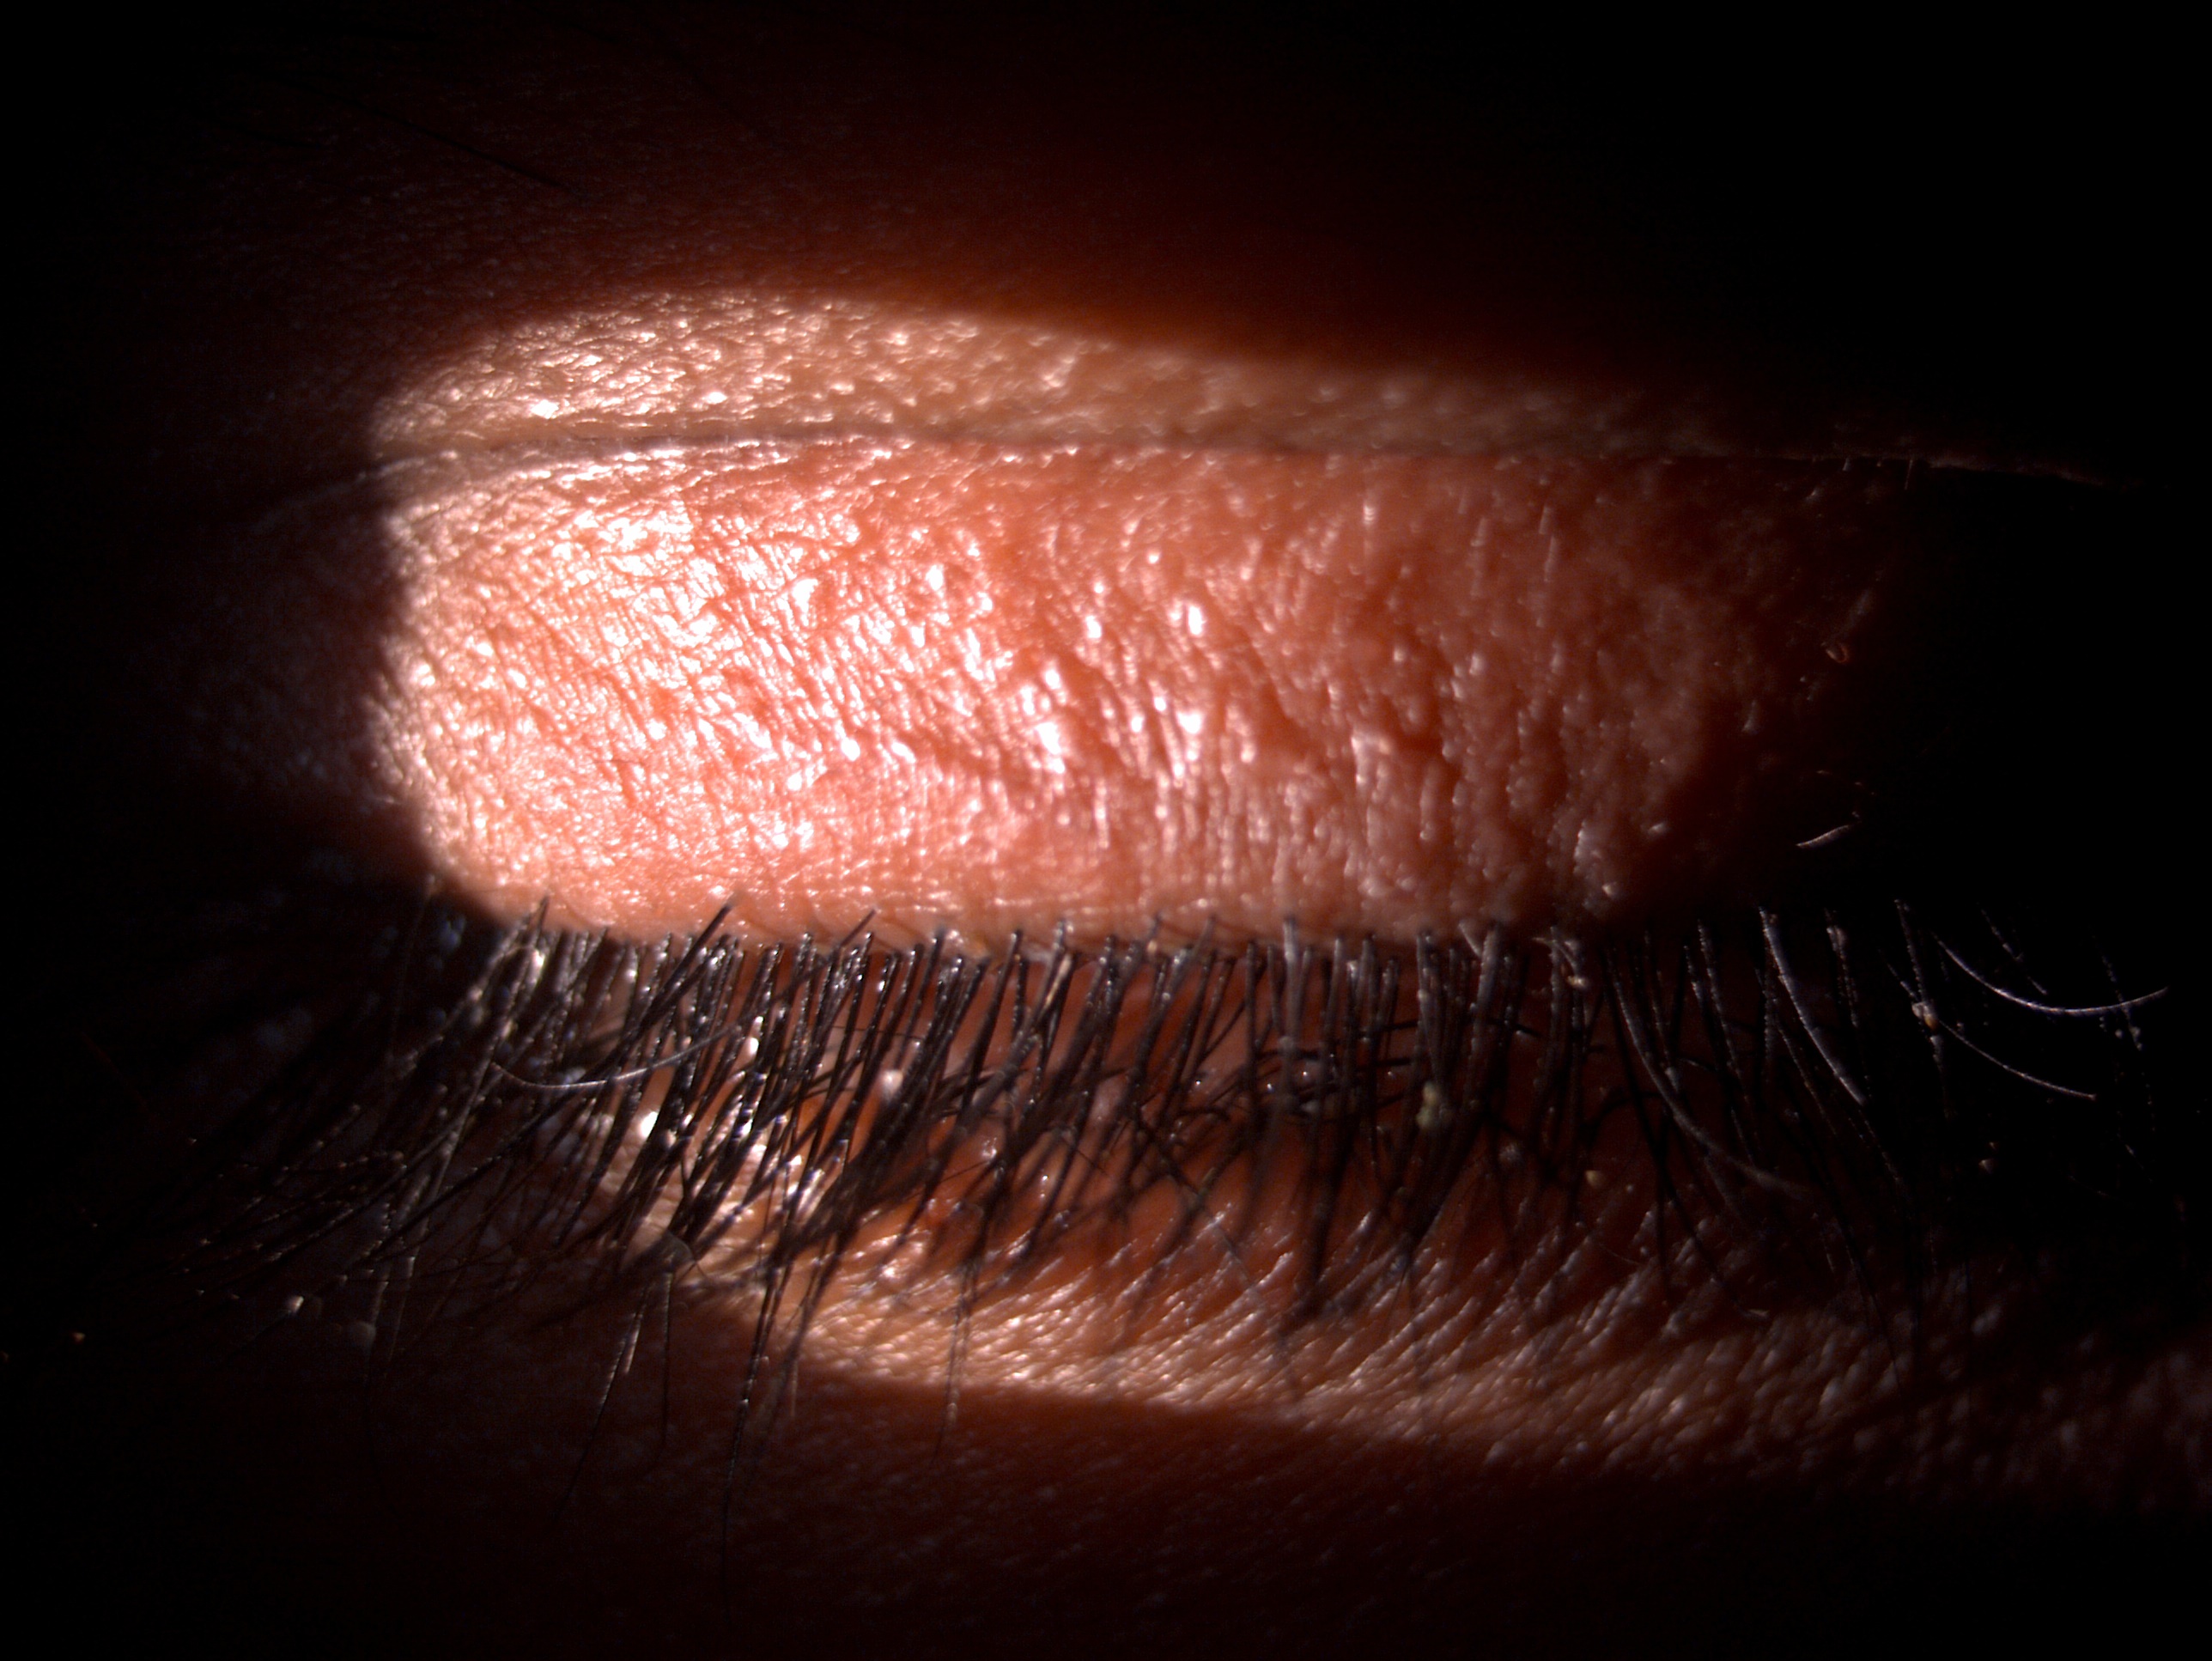 Slit lamp image of the patient's eyelashes depicting seborrheic anterior blepharitis secondary to Phthiriasis palpebrarum